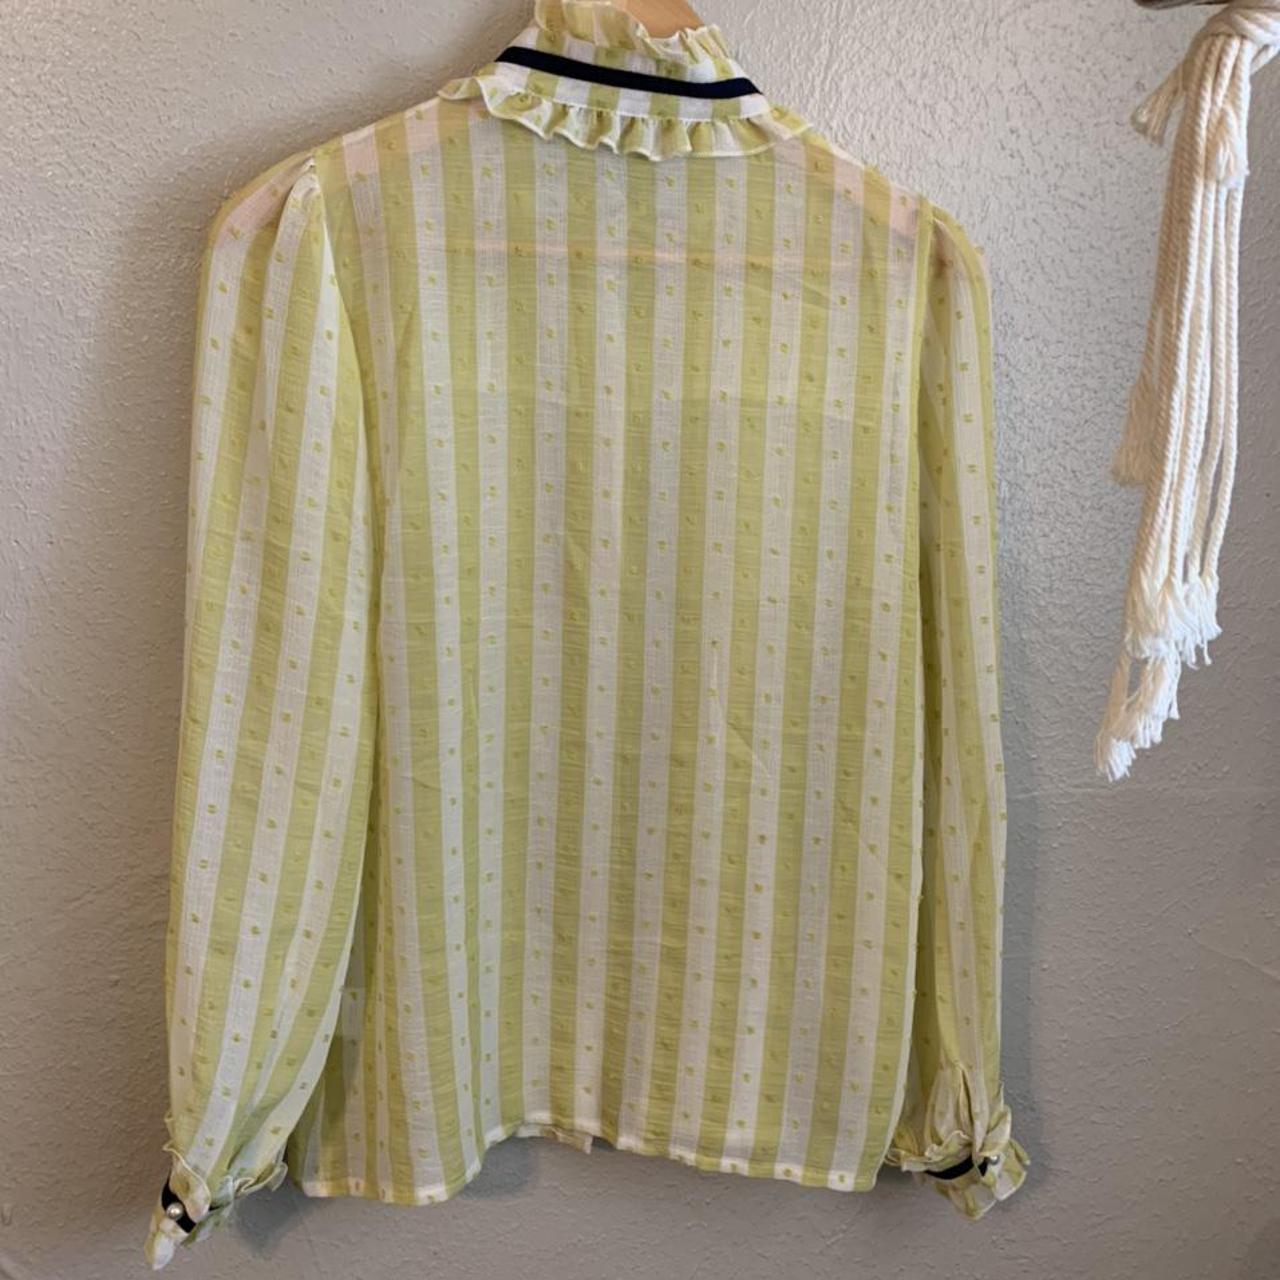 Product Image 4 - Vintage style Sister Jane blouse.